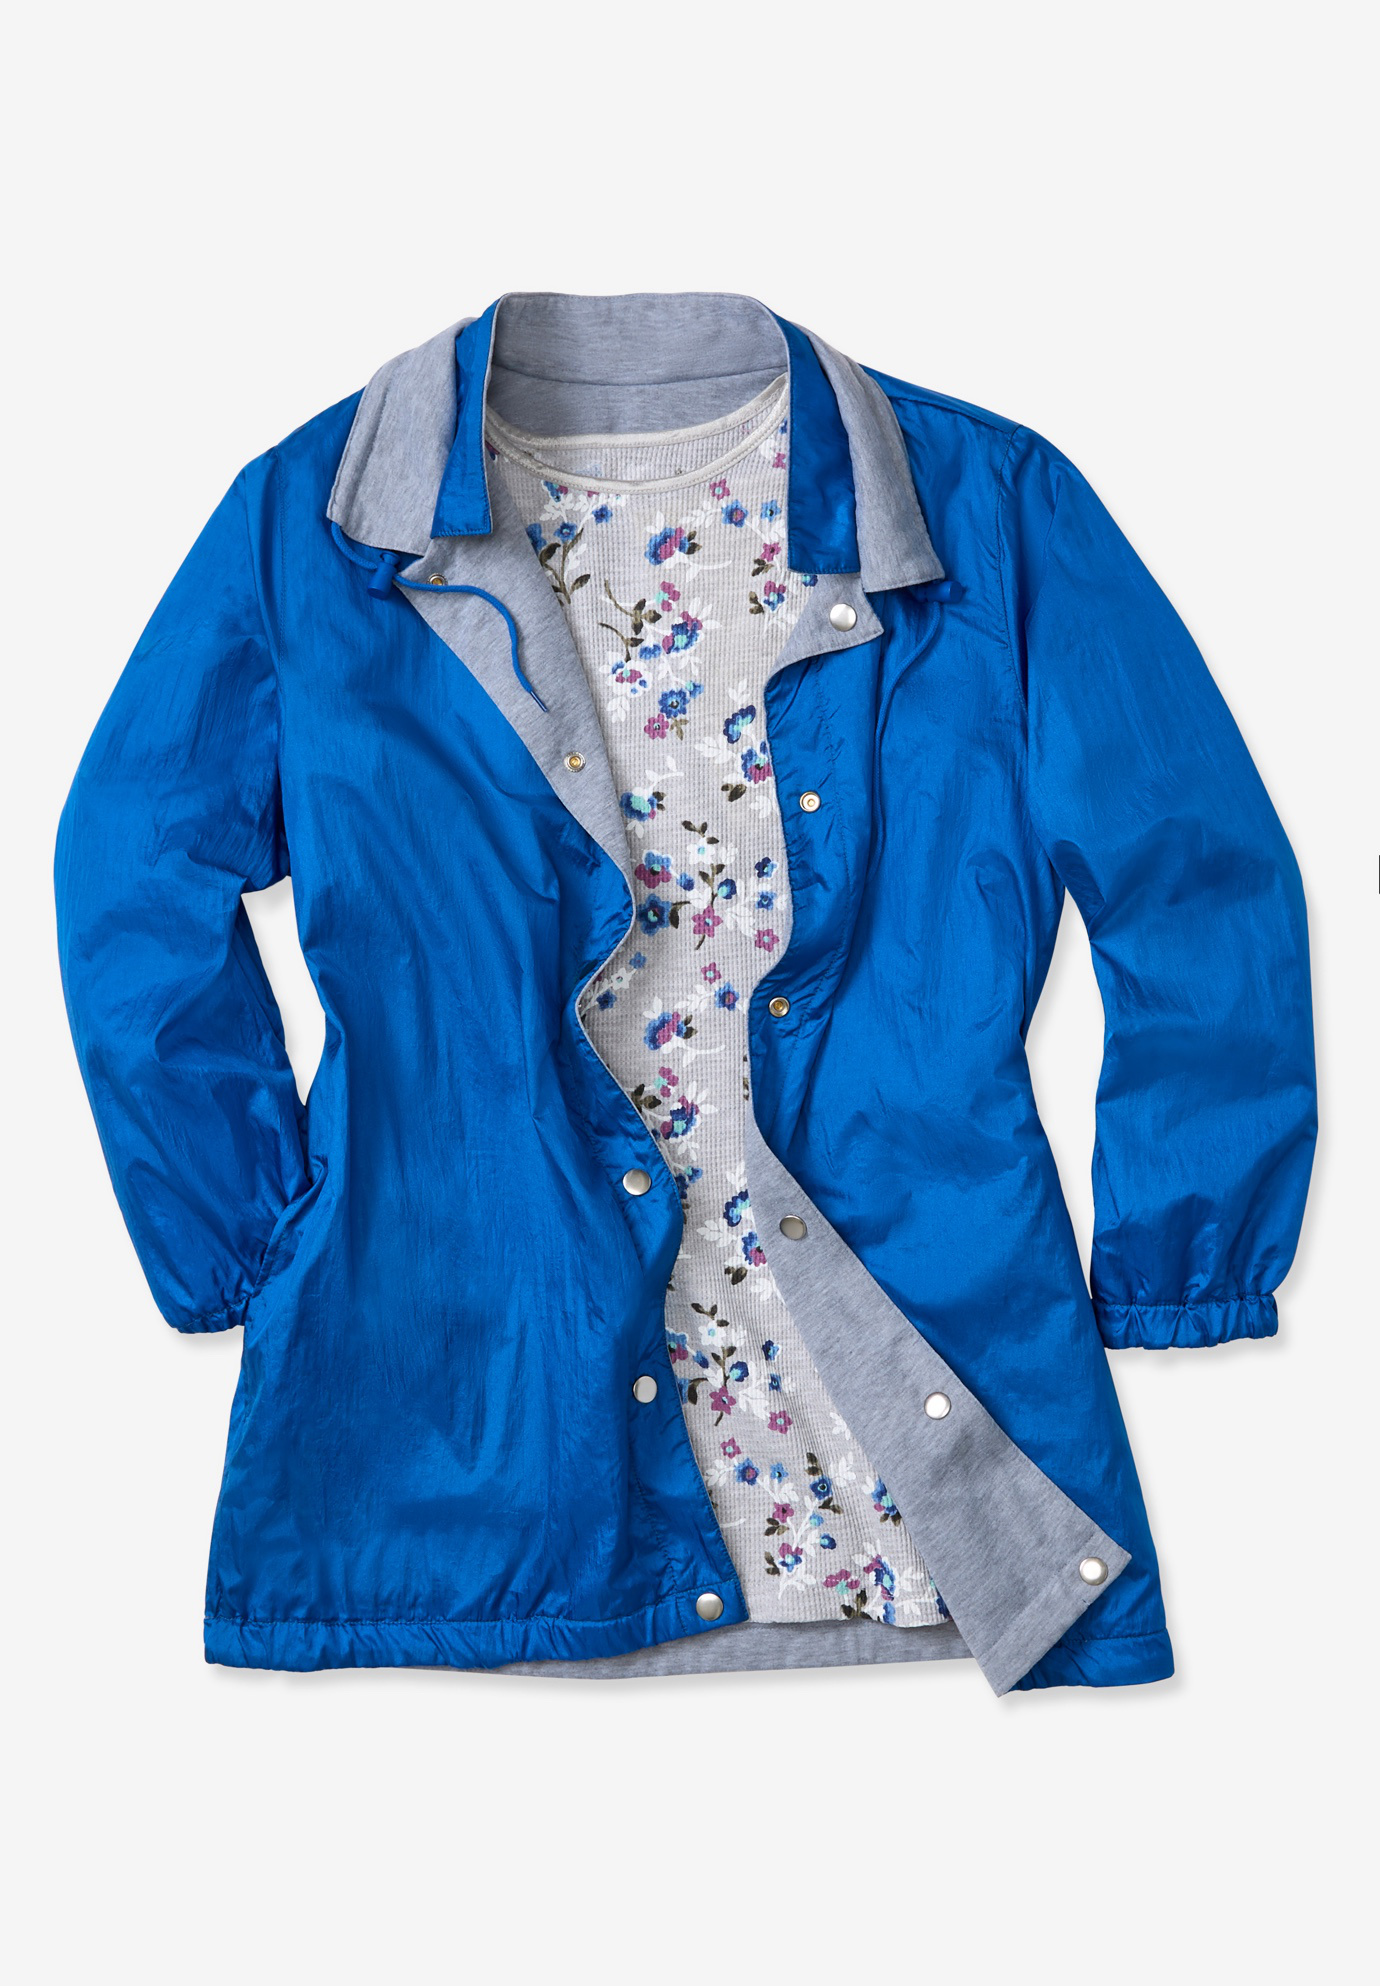 Woman Within Women's Plus Size Fleece Nylon Reversible Jacket Rain Jacket - image 5 of 6